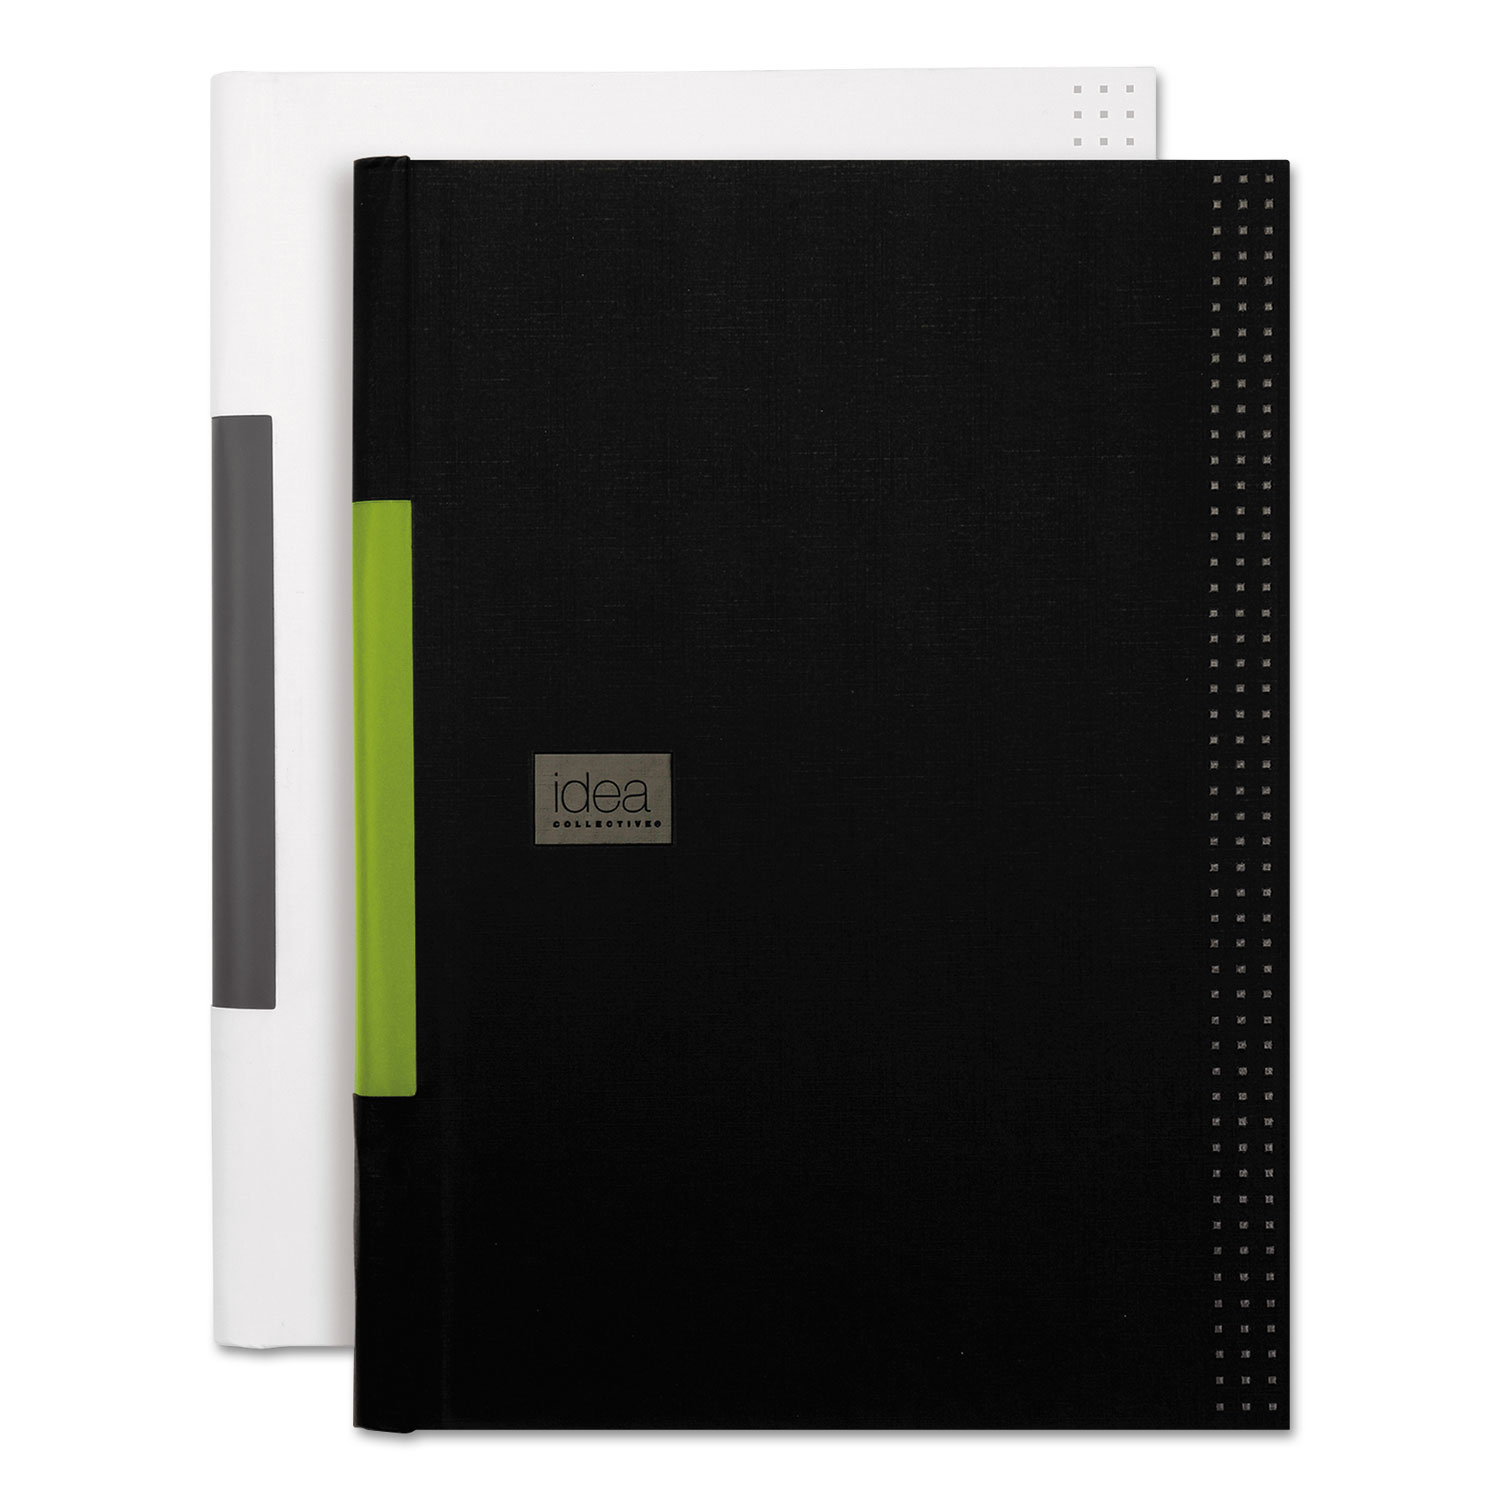 Idea Collective Professional Casebound Hardcover Notebook, 11 3/4x8 1/4, Black